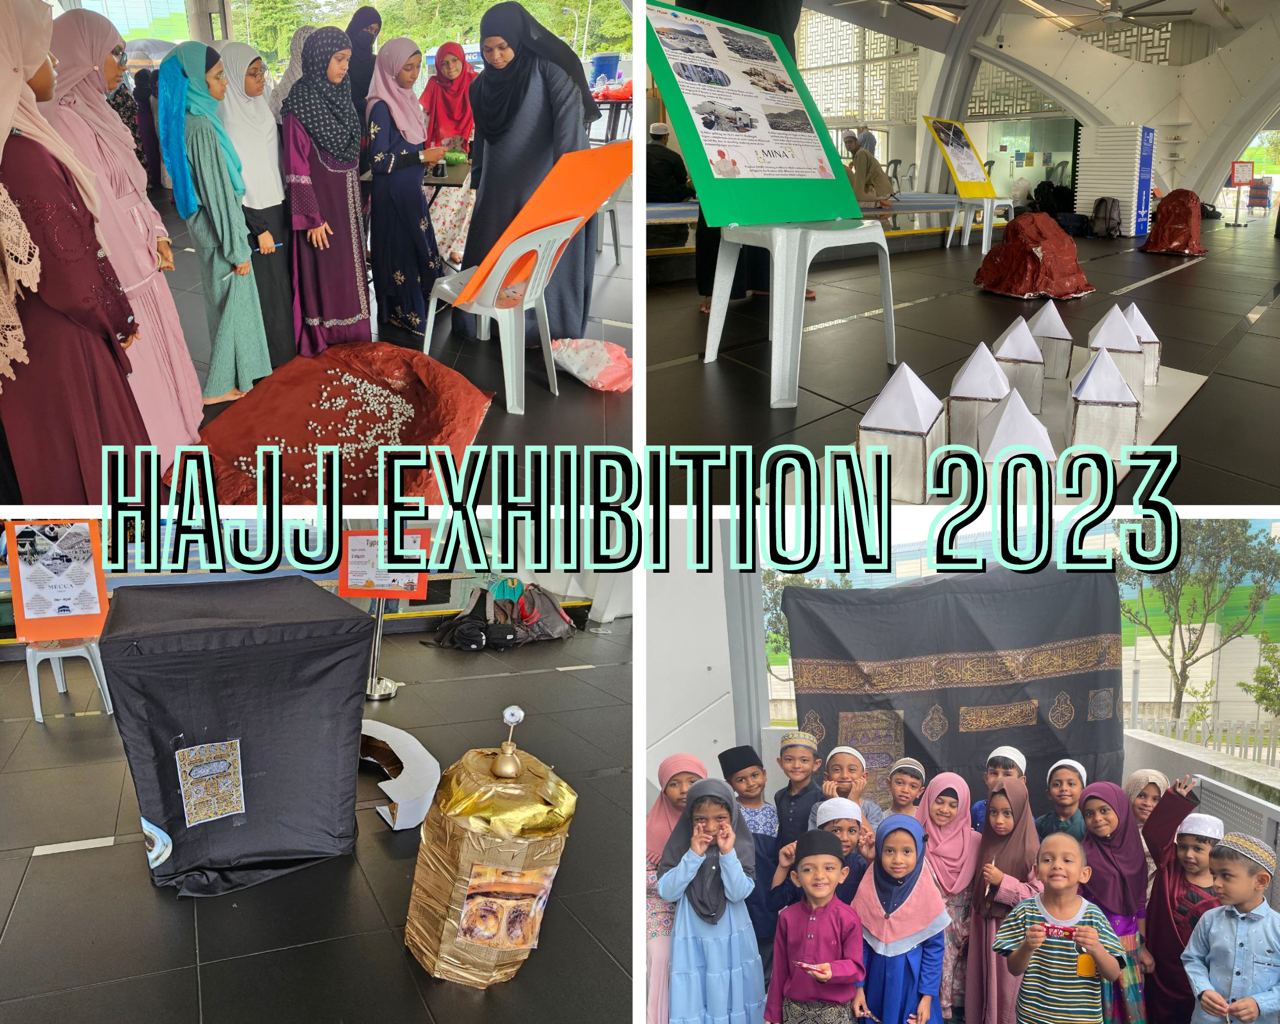 Hajj Exhibition @ Masjid Assyafaah